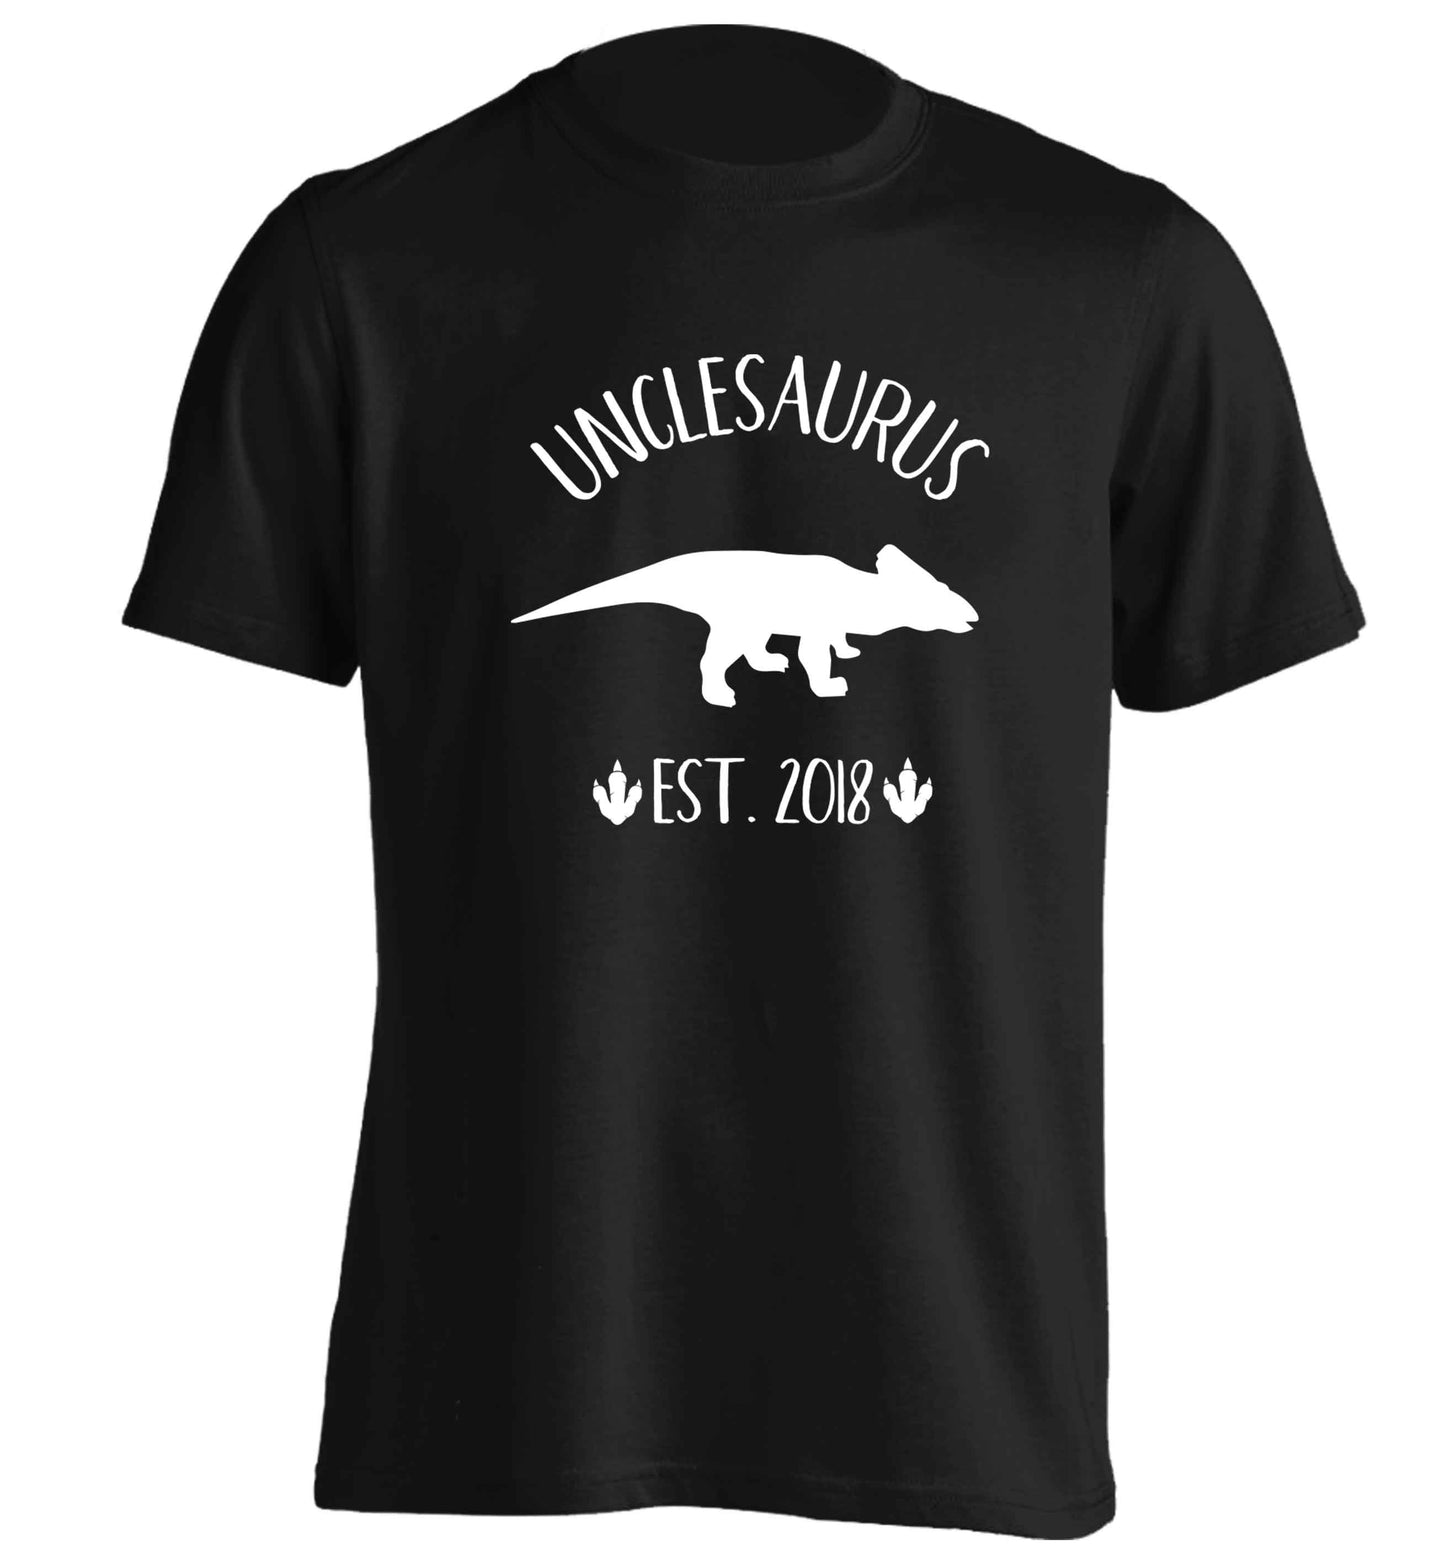 Personalised unclesaurus since (custom date) adults unisex black Tshirt 2XL